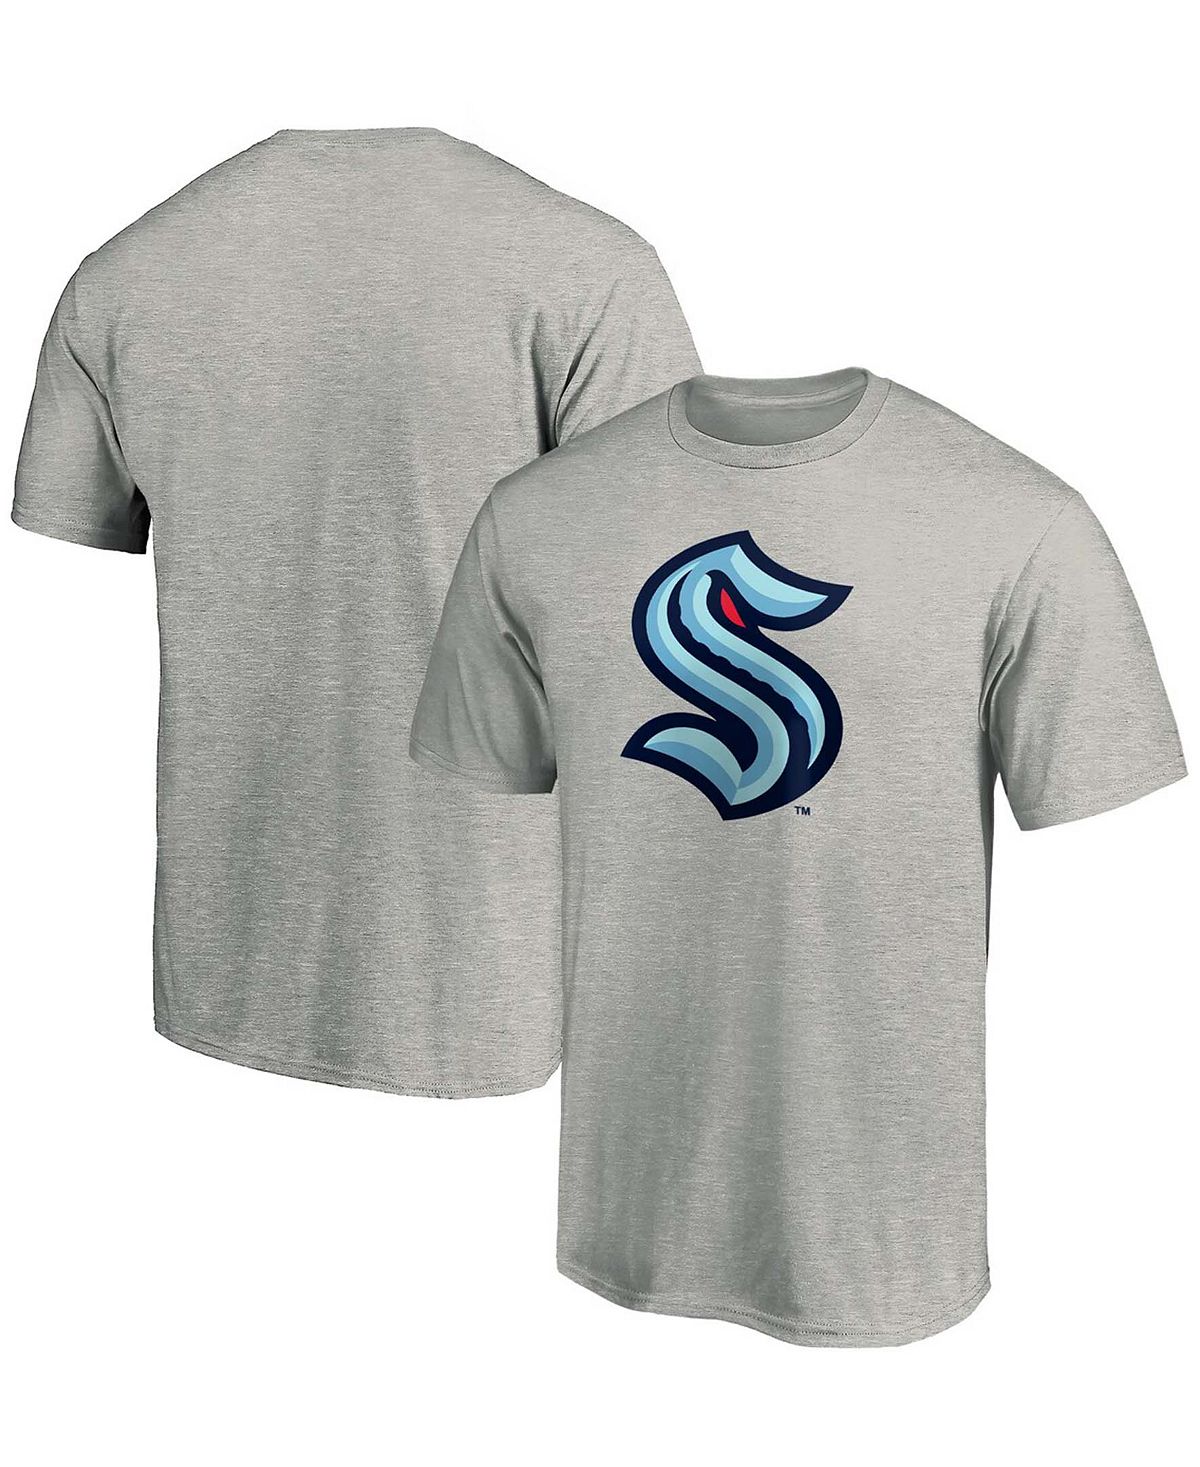 Мужская футболка с логотипом seattle kraken primary heather grey Fanatics, мульти